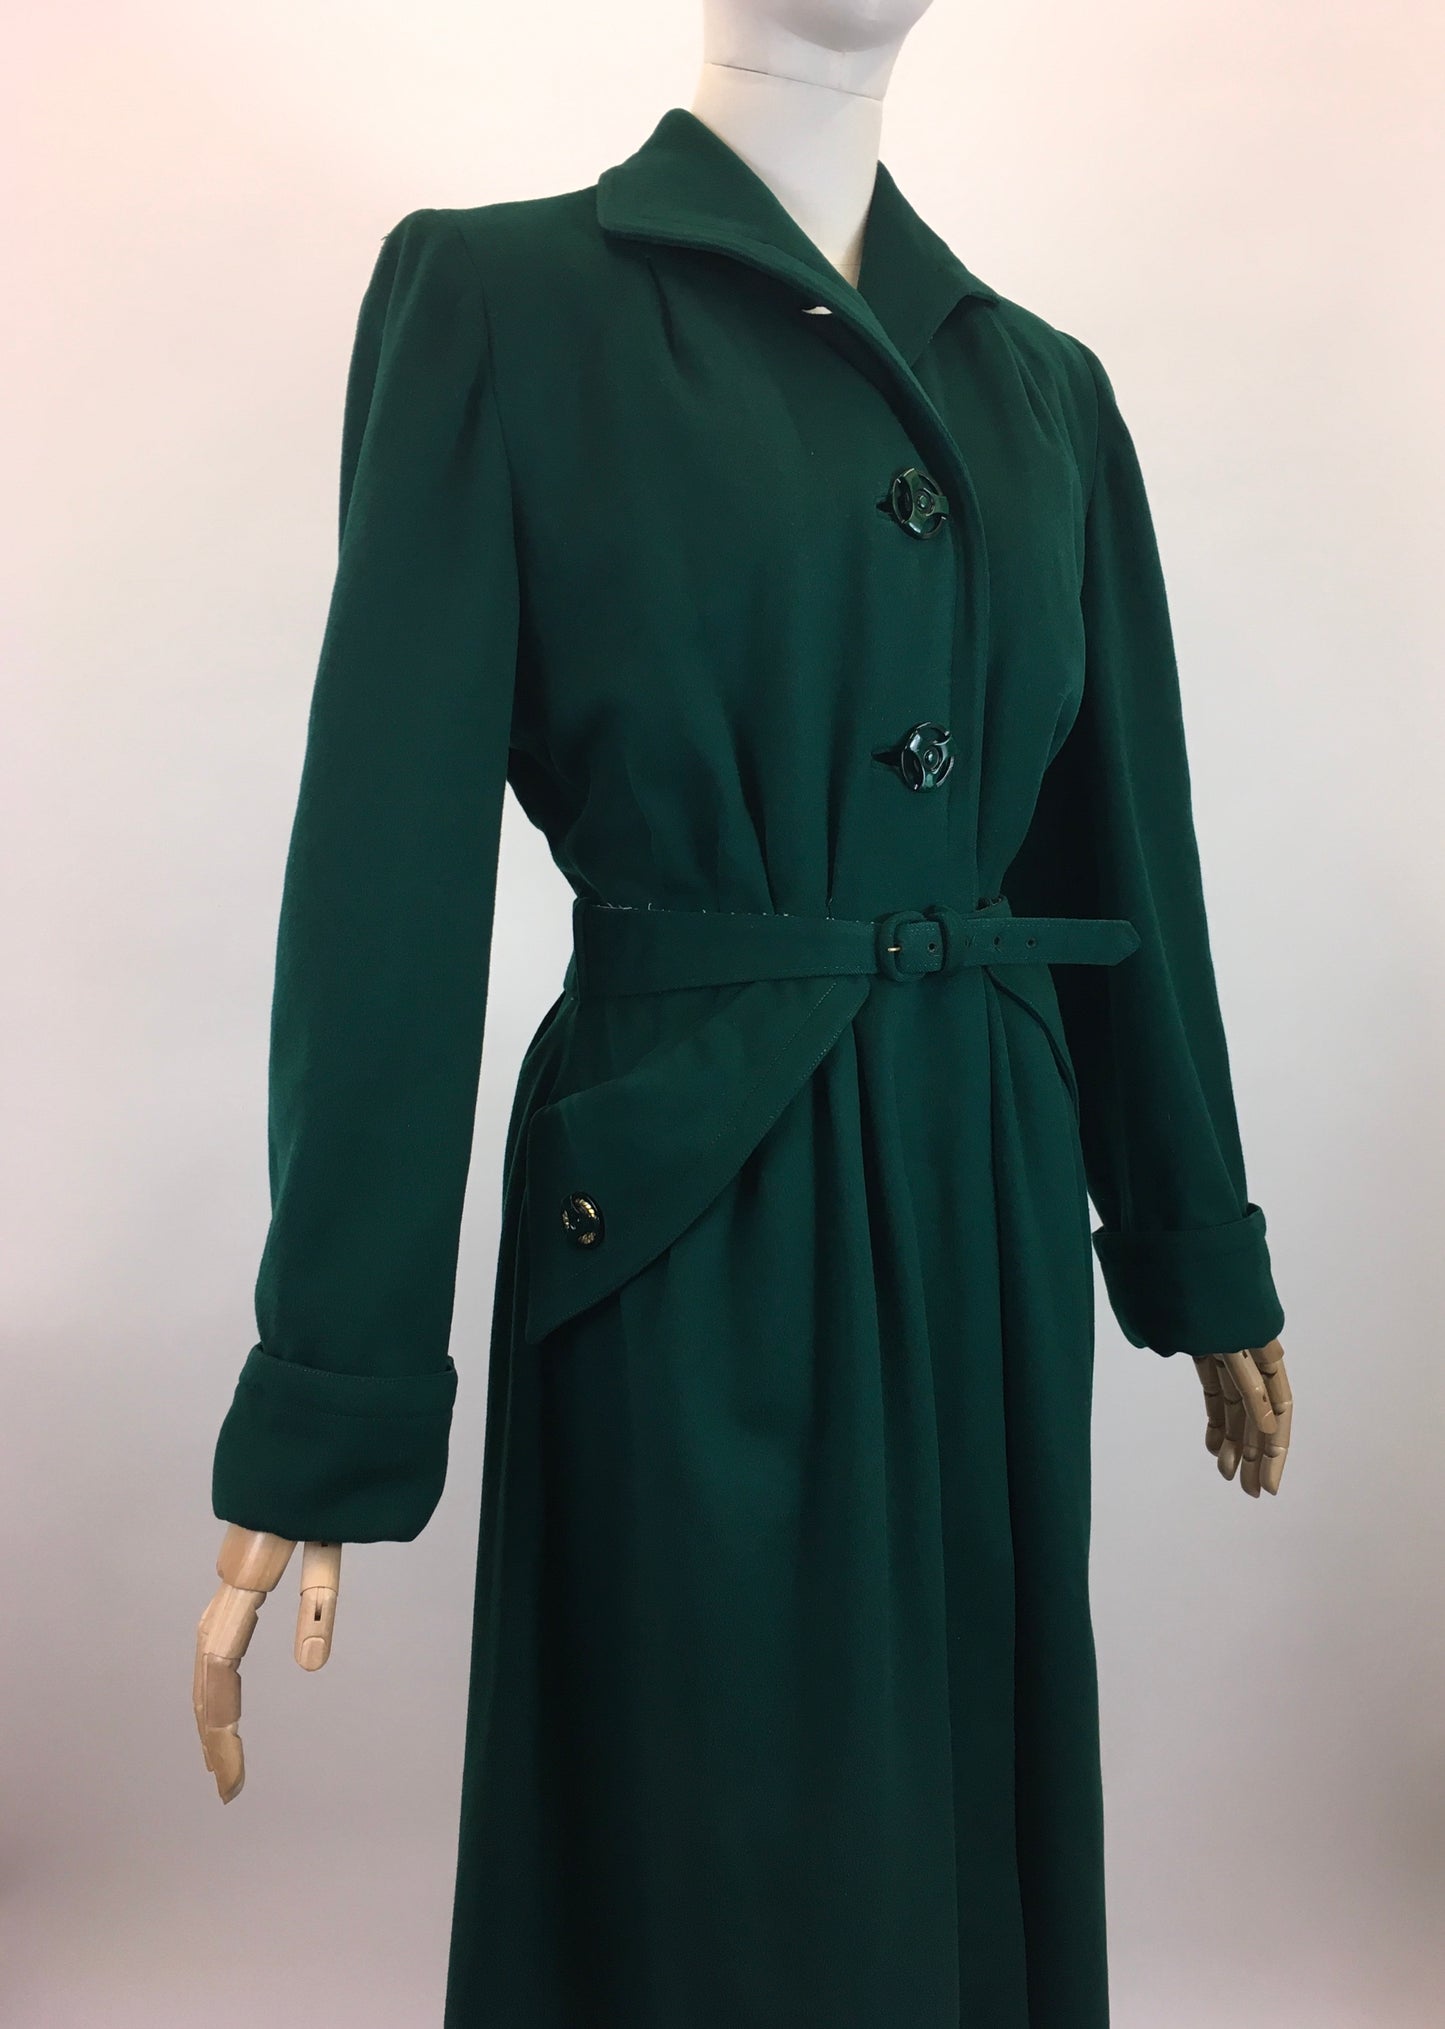 Original 1940's SENSATIONAL Belted Wool Coat - In An Emerald Green